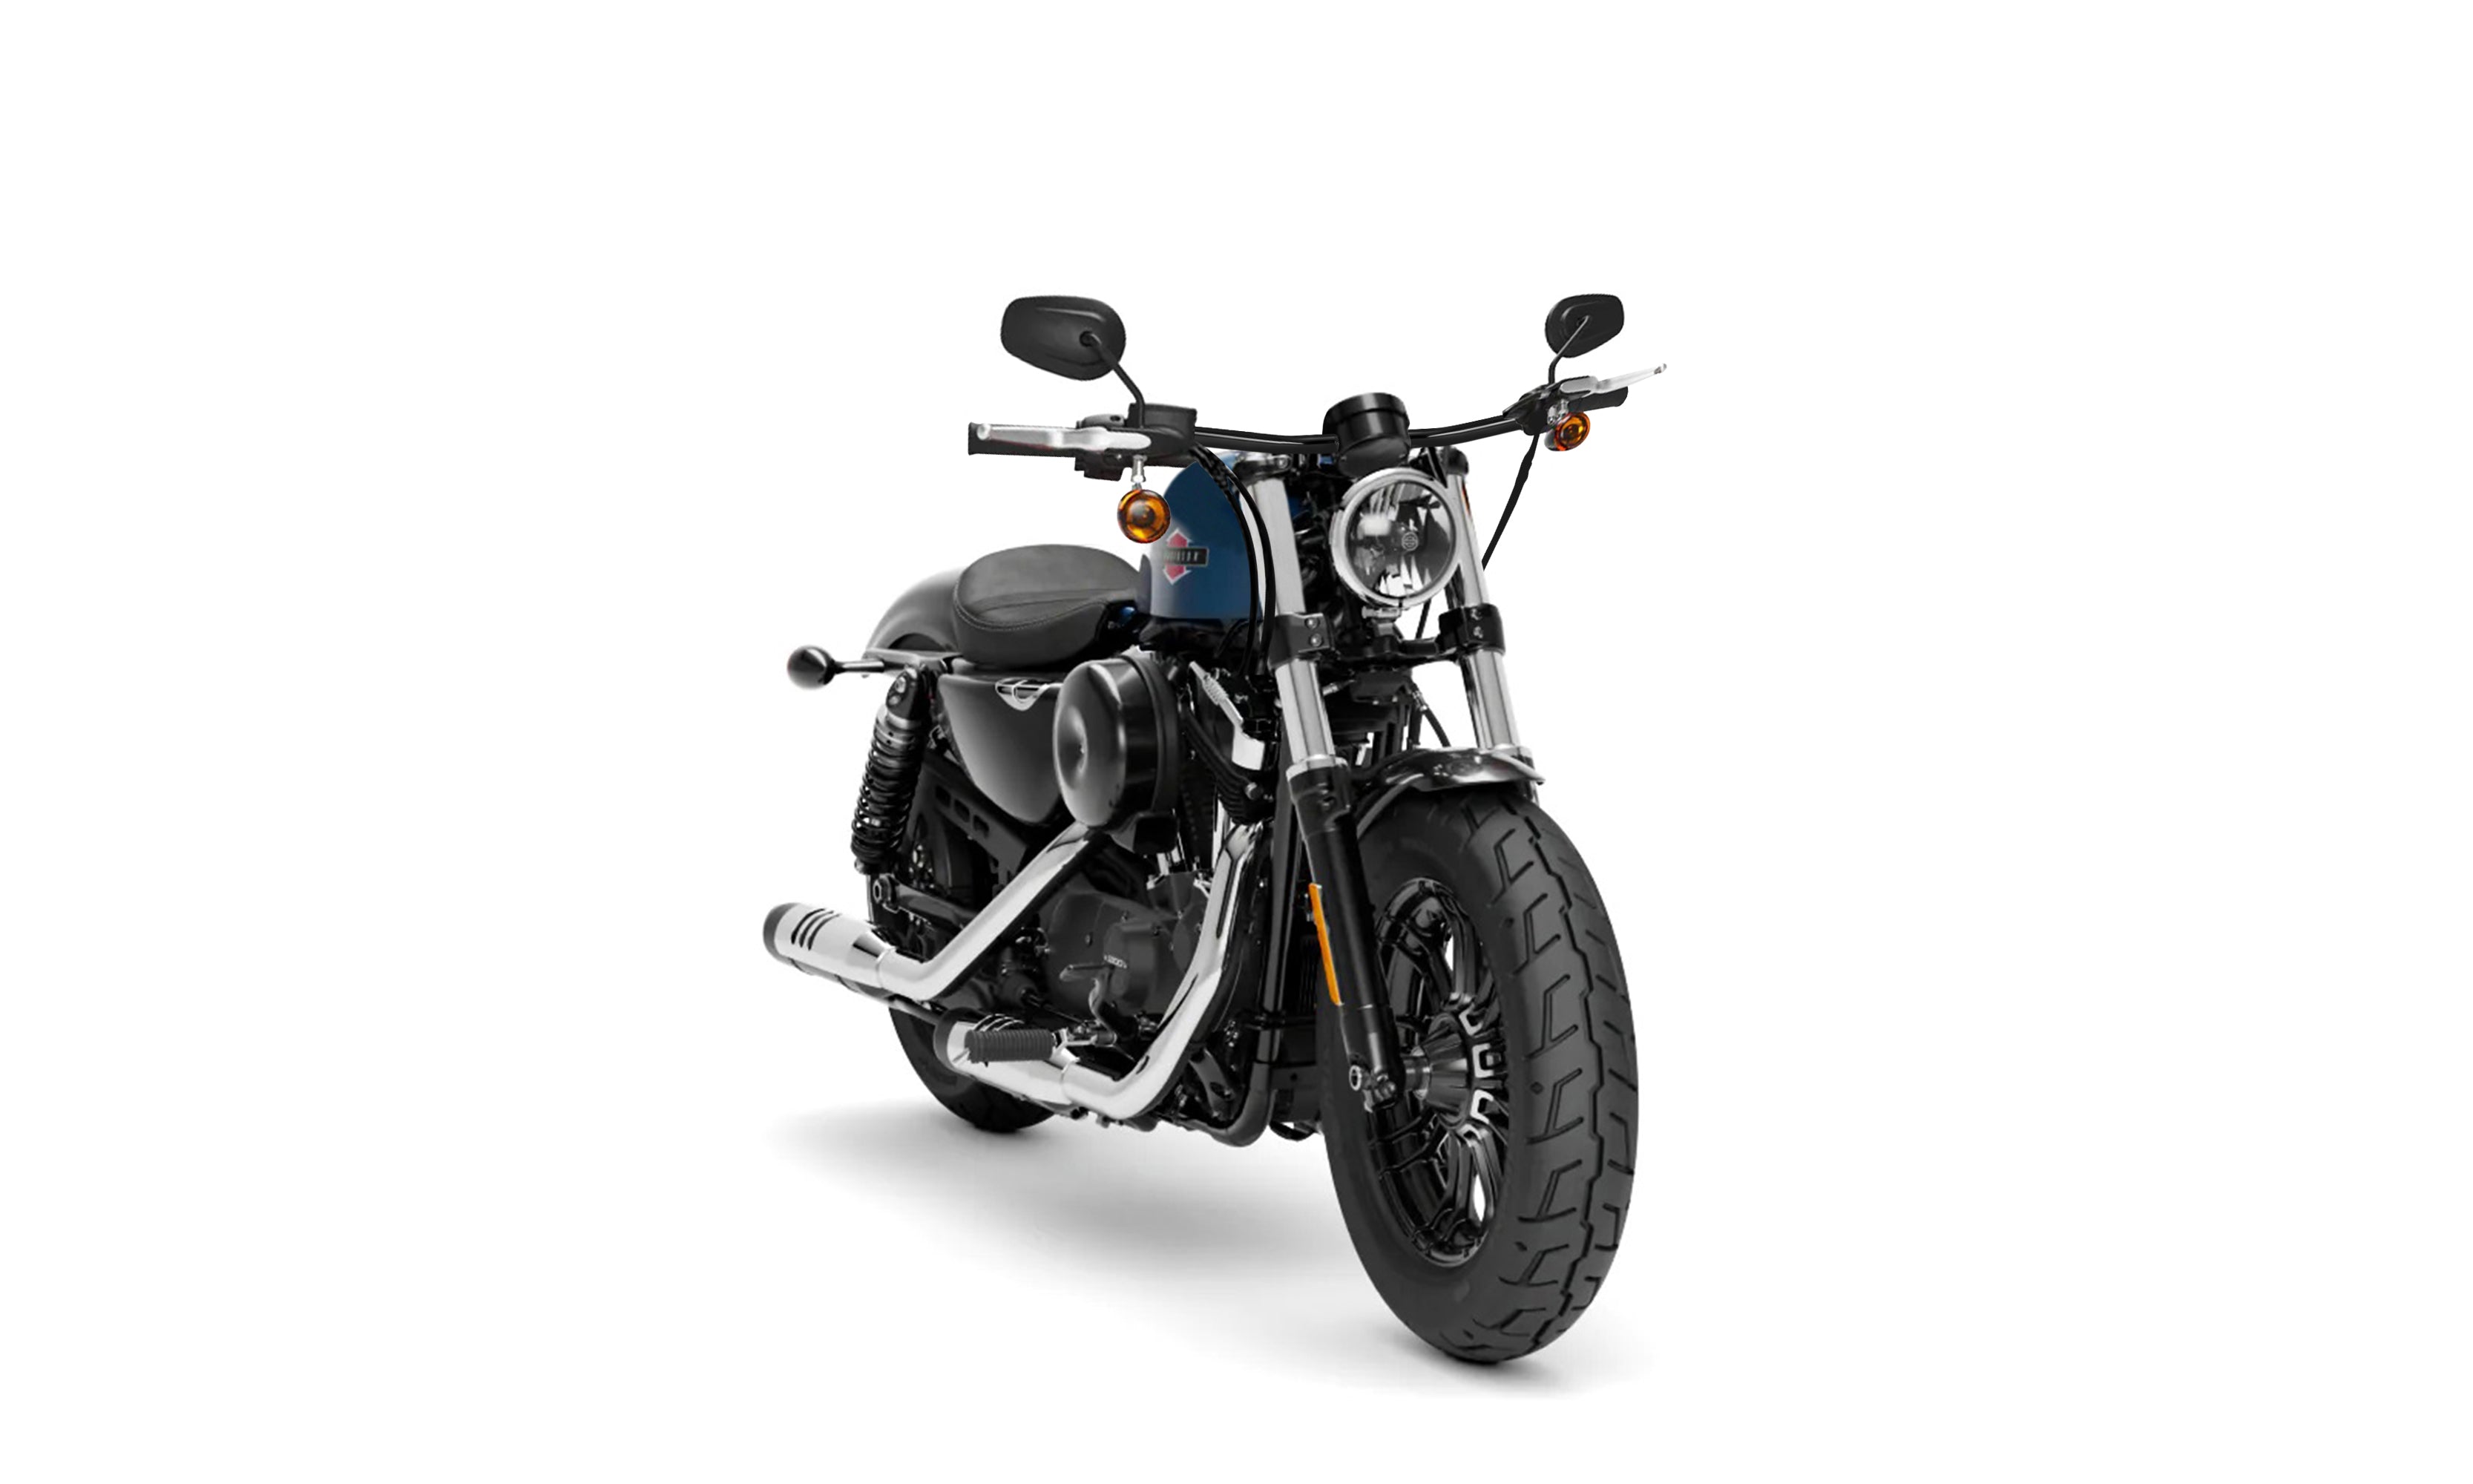 Viking Iron Born Drag Handlebar For Harley Sportster Forty Eight Gloss Black Bag on Bike View @expand